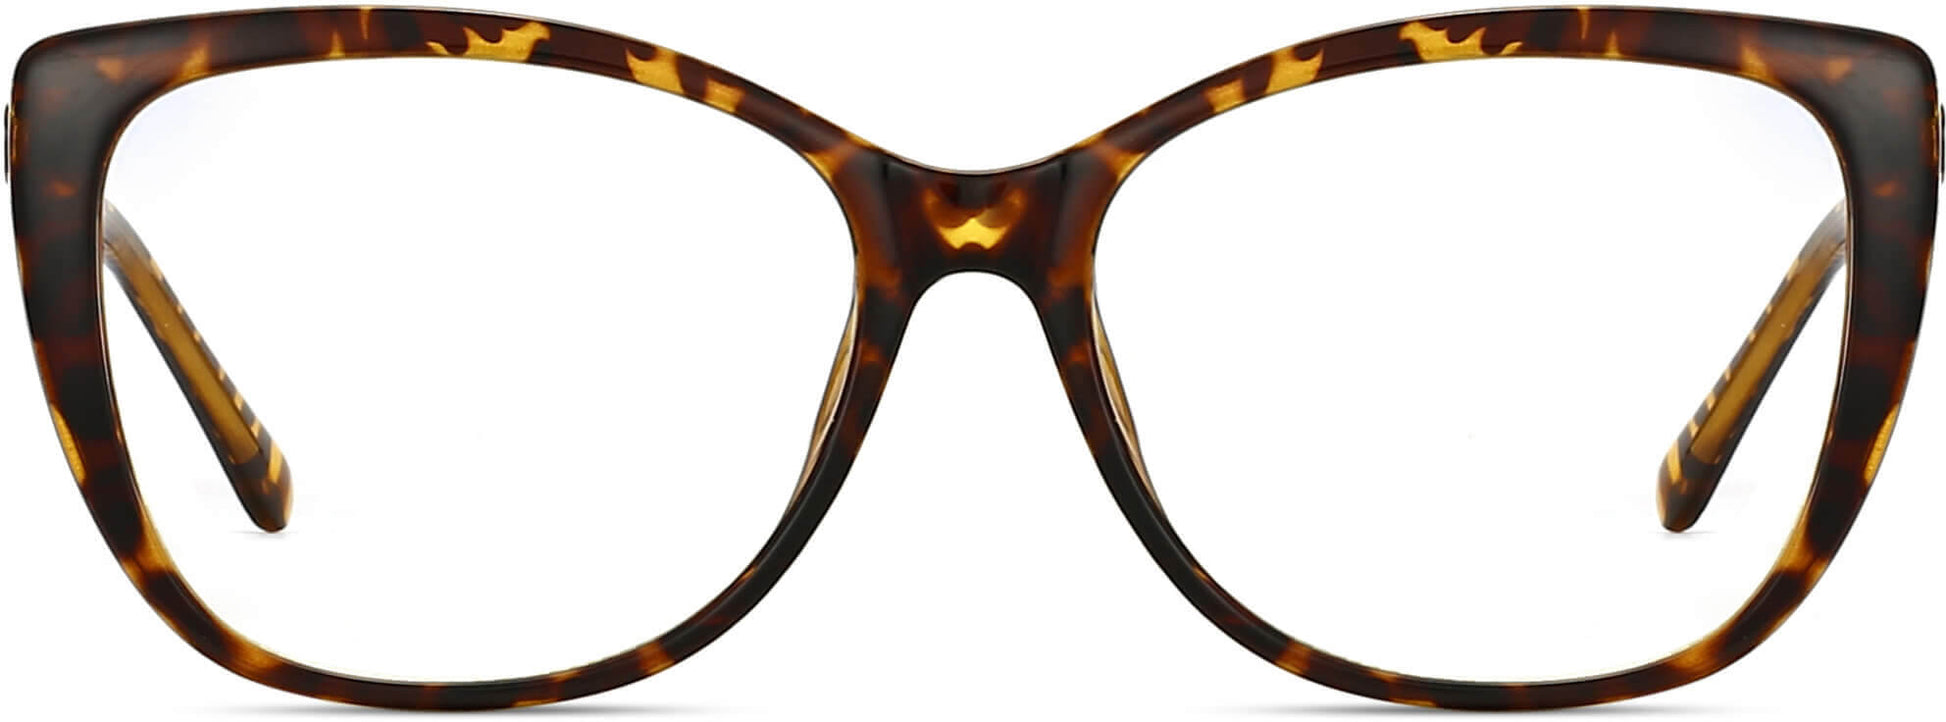 Verna Cateye Tortoise Eyeglasses from ANRRI, front view